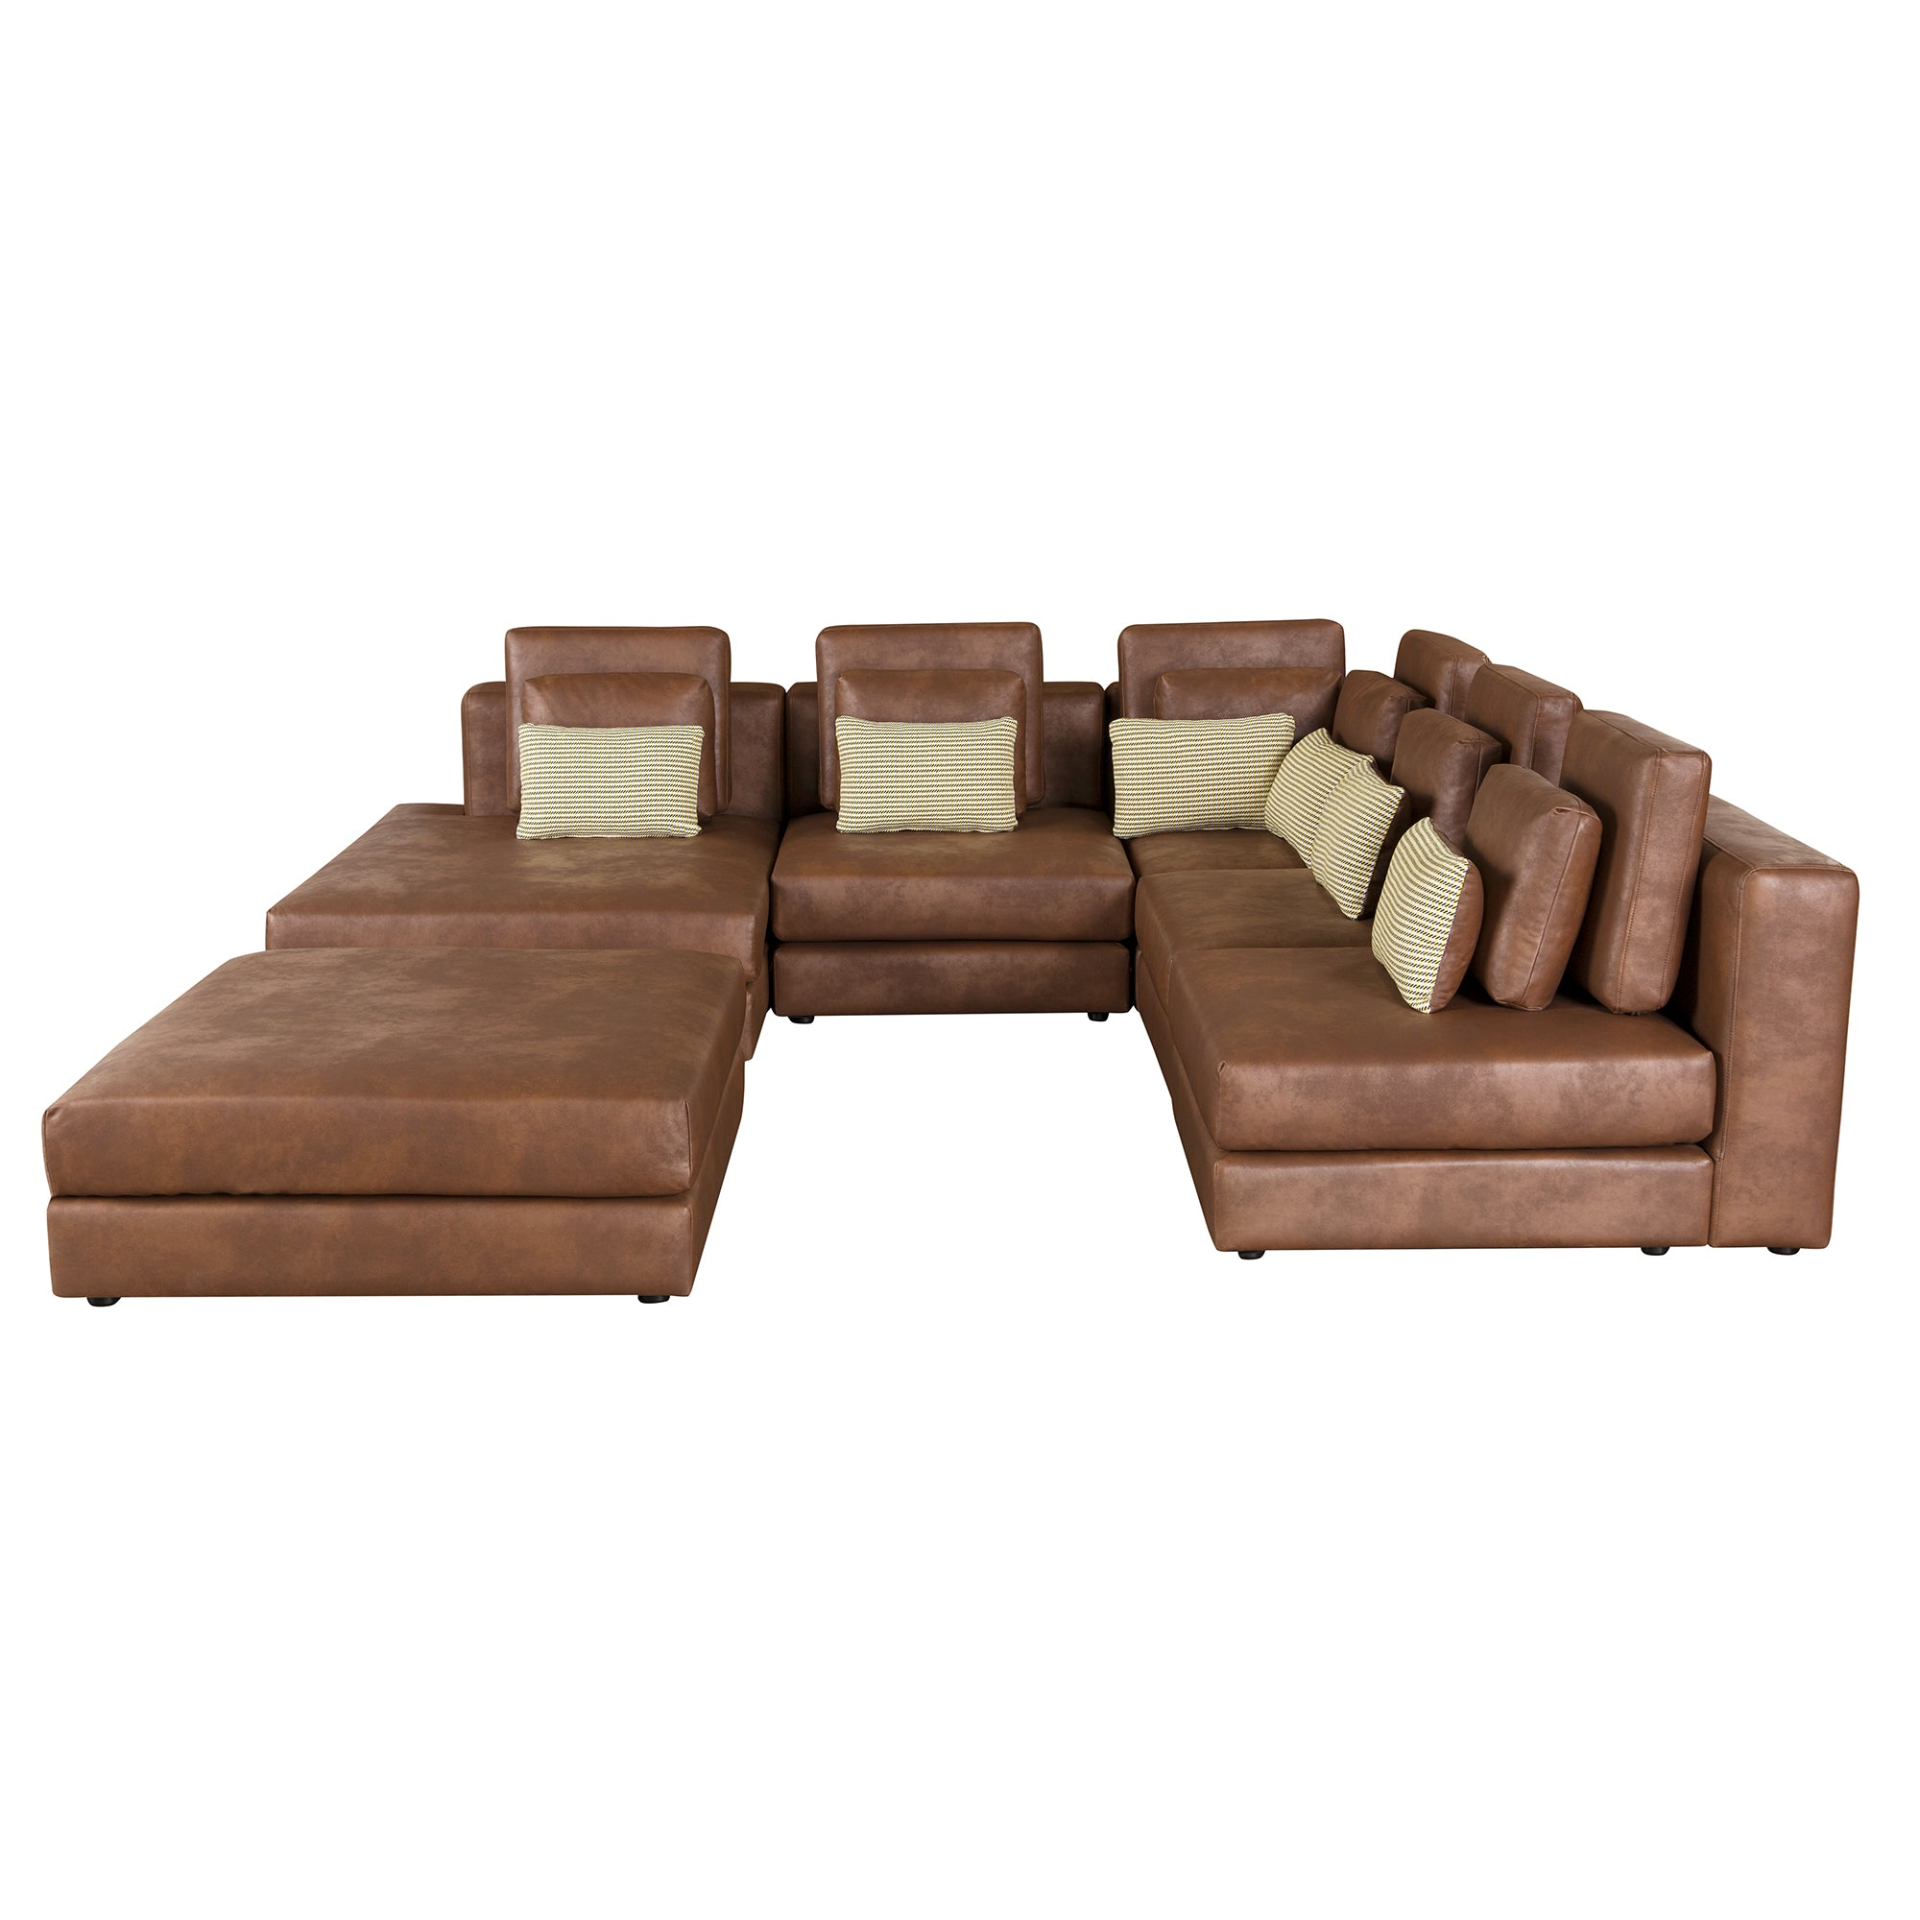 Brown - Chic Modular Sectional Sofa With Movable Ottoman (112.7" x 103")